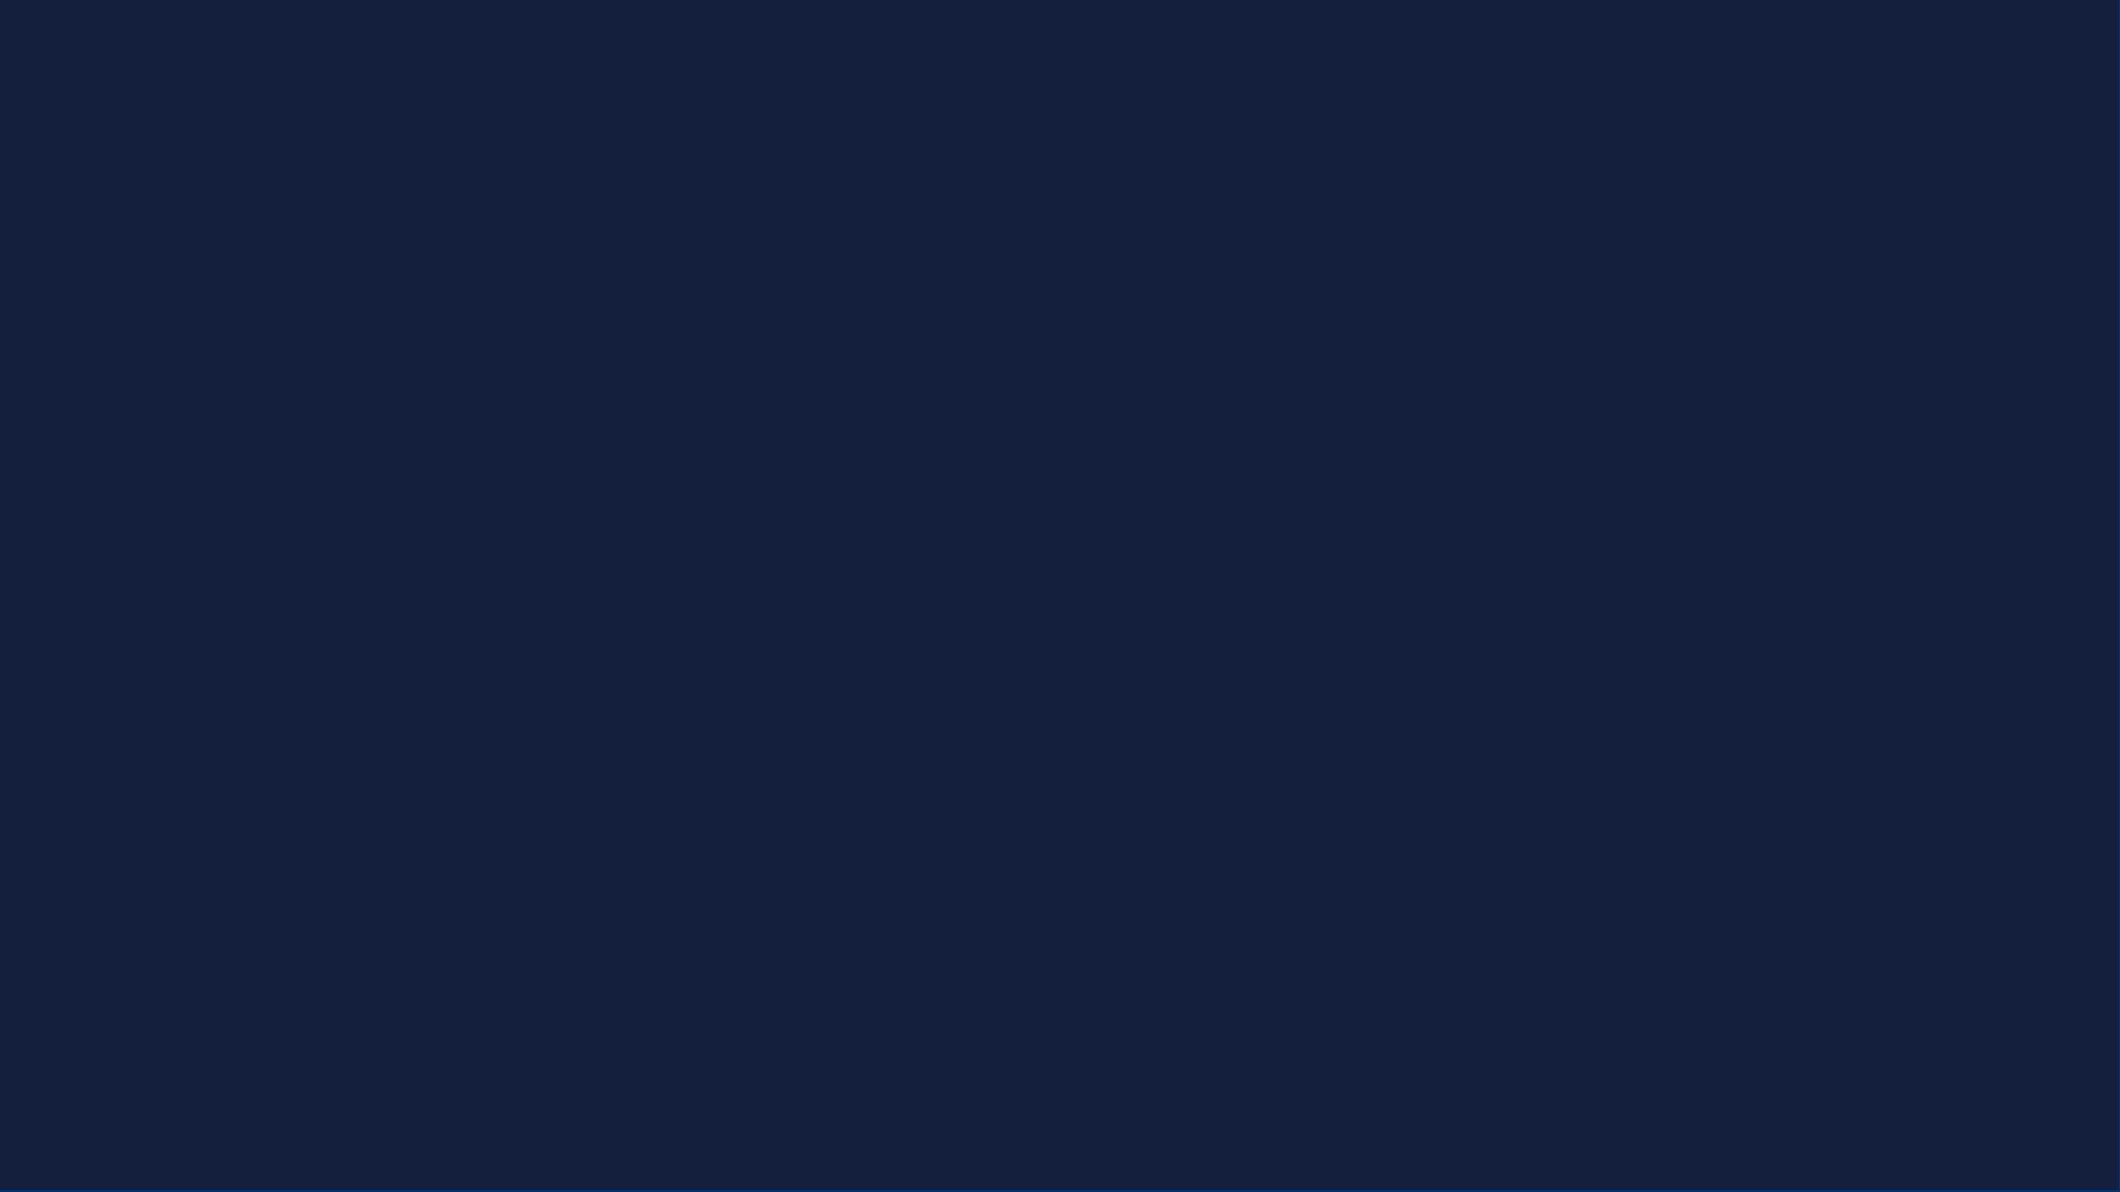 Free download 57 Royal Blue Wallpaper [2120x1192] for your Desktop, Mobile & Tablet. Explore Navy Blue Aesthetic Wallpaper. Navy Blue Aesthetic Wallpaper, Blue Aesthetic Wallpaper, Navy Blue Wallpaper